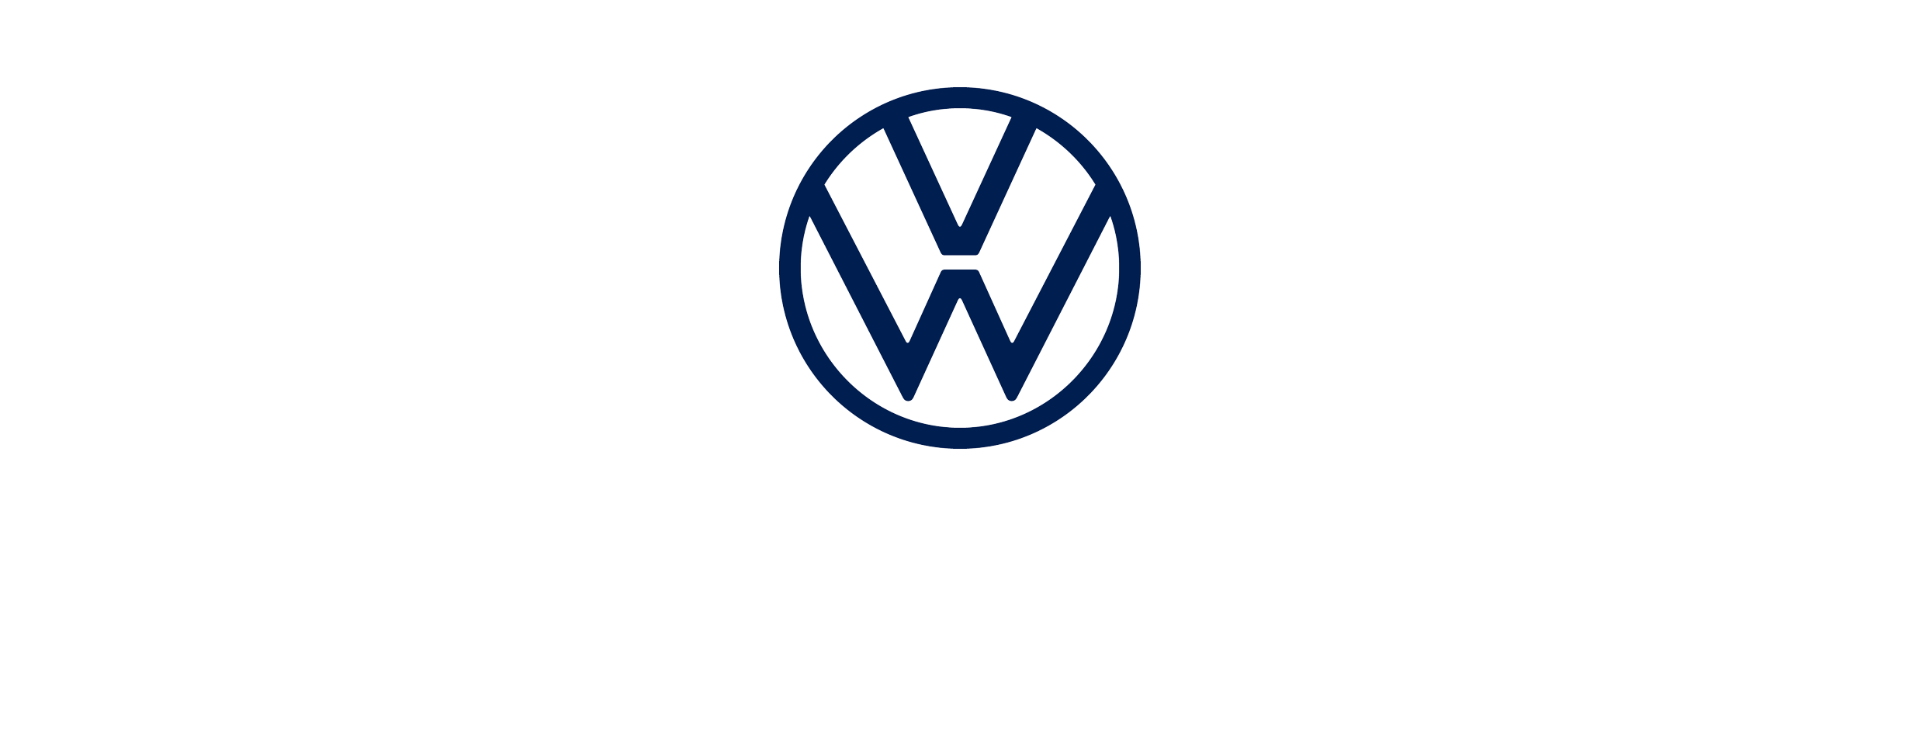 VW history